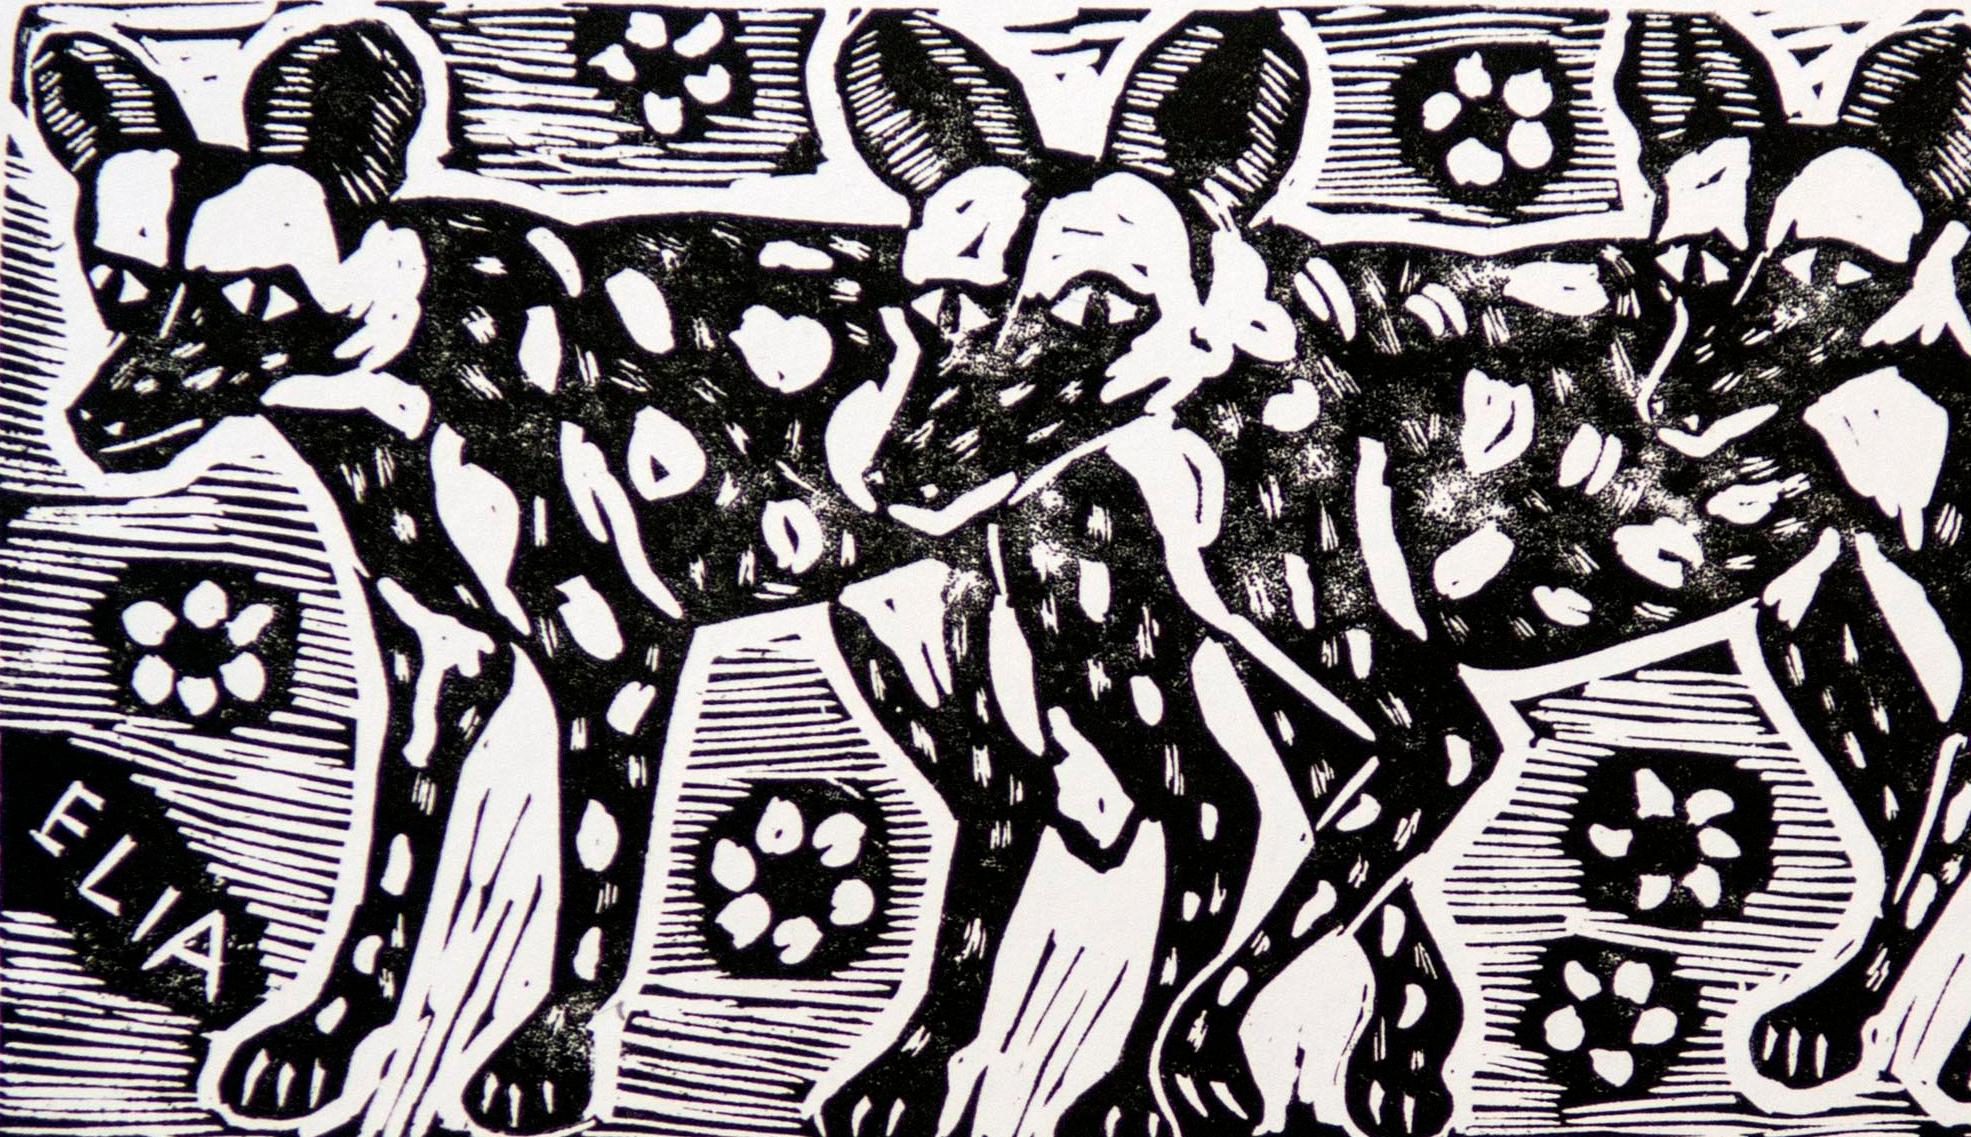 3 Wild Dogs, Elia Shiwoohamba, Linoleum block print on paper 1